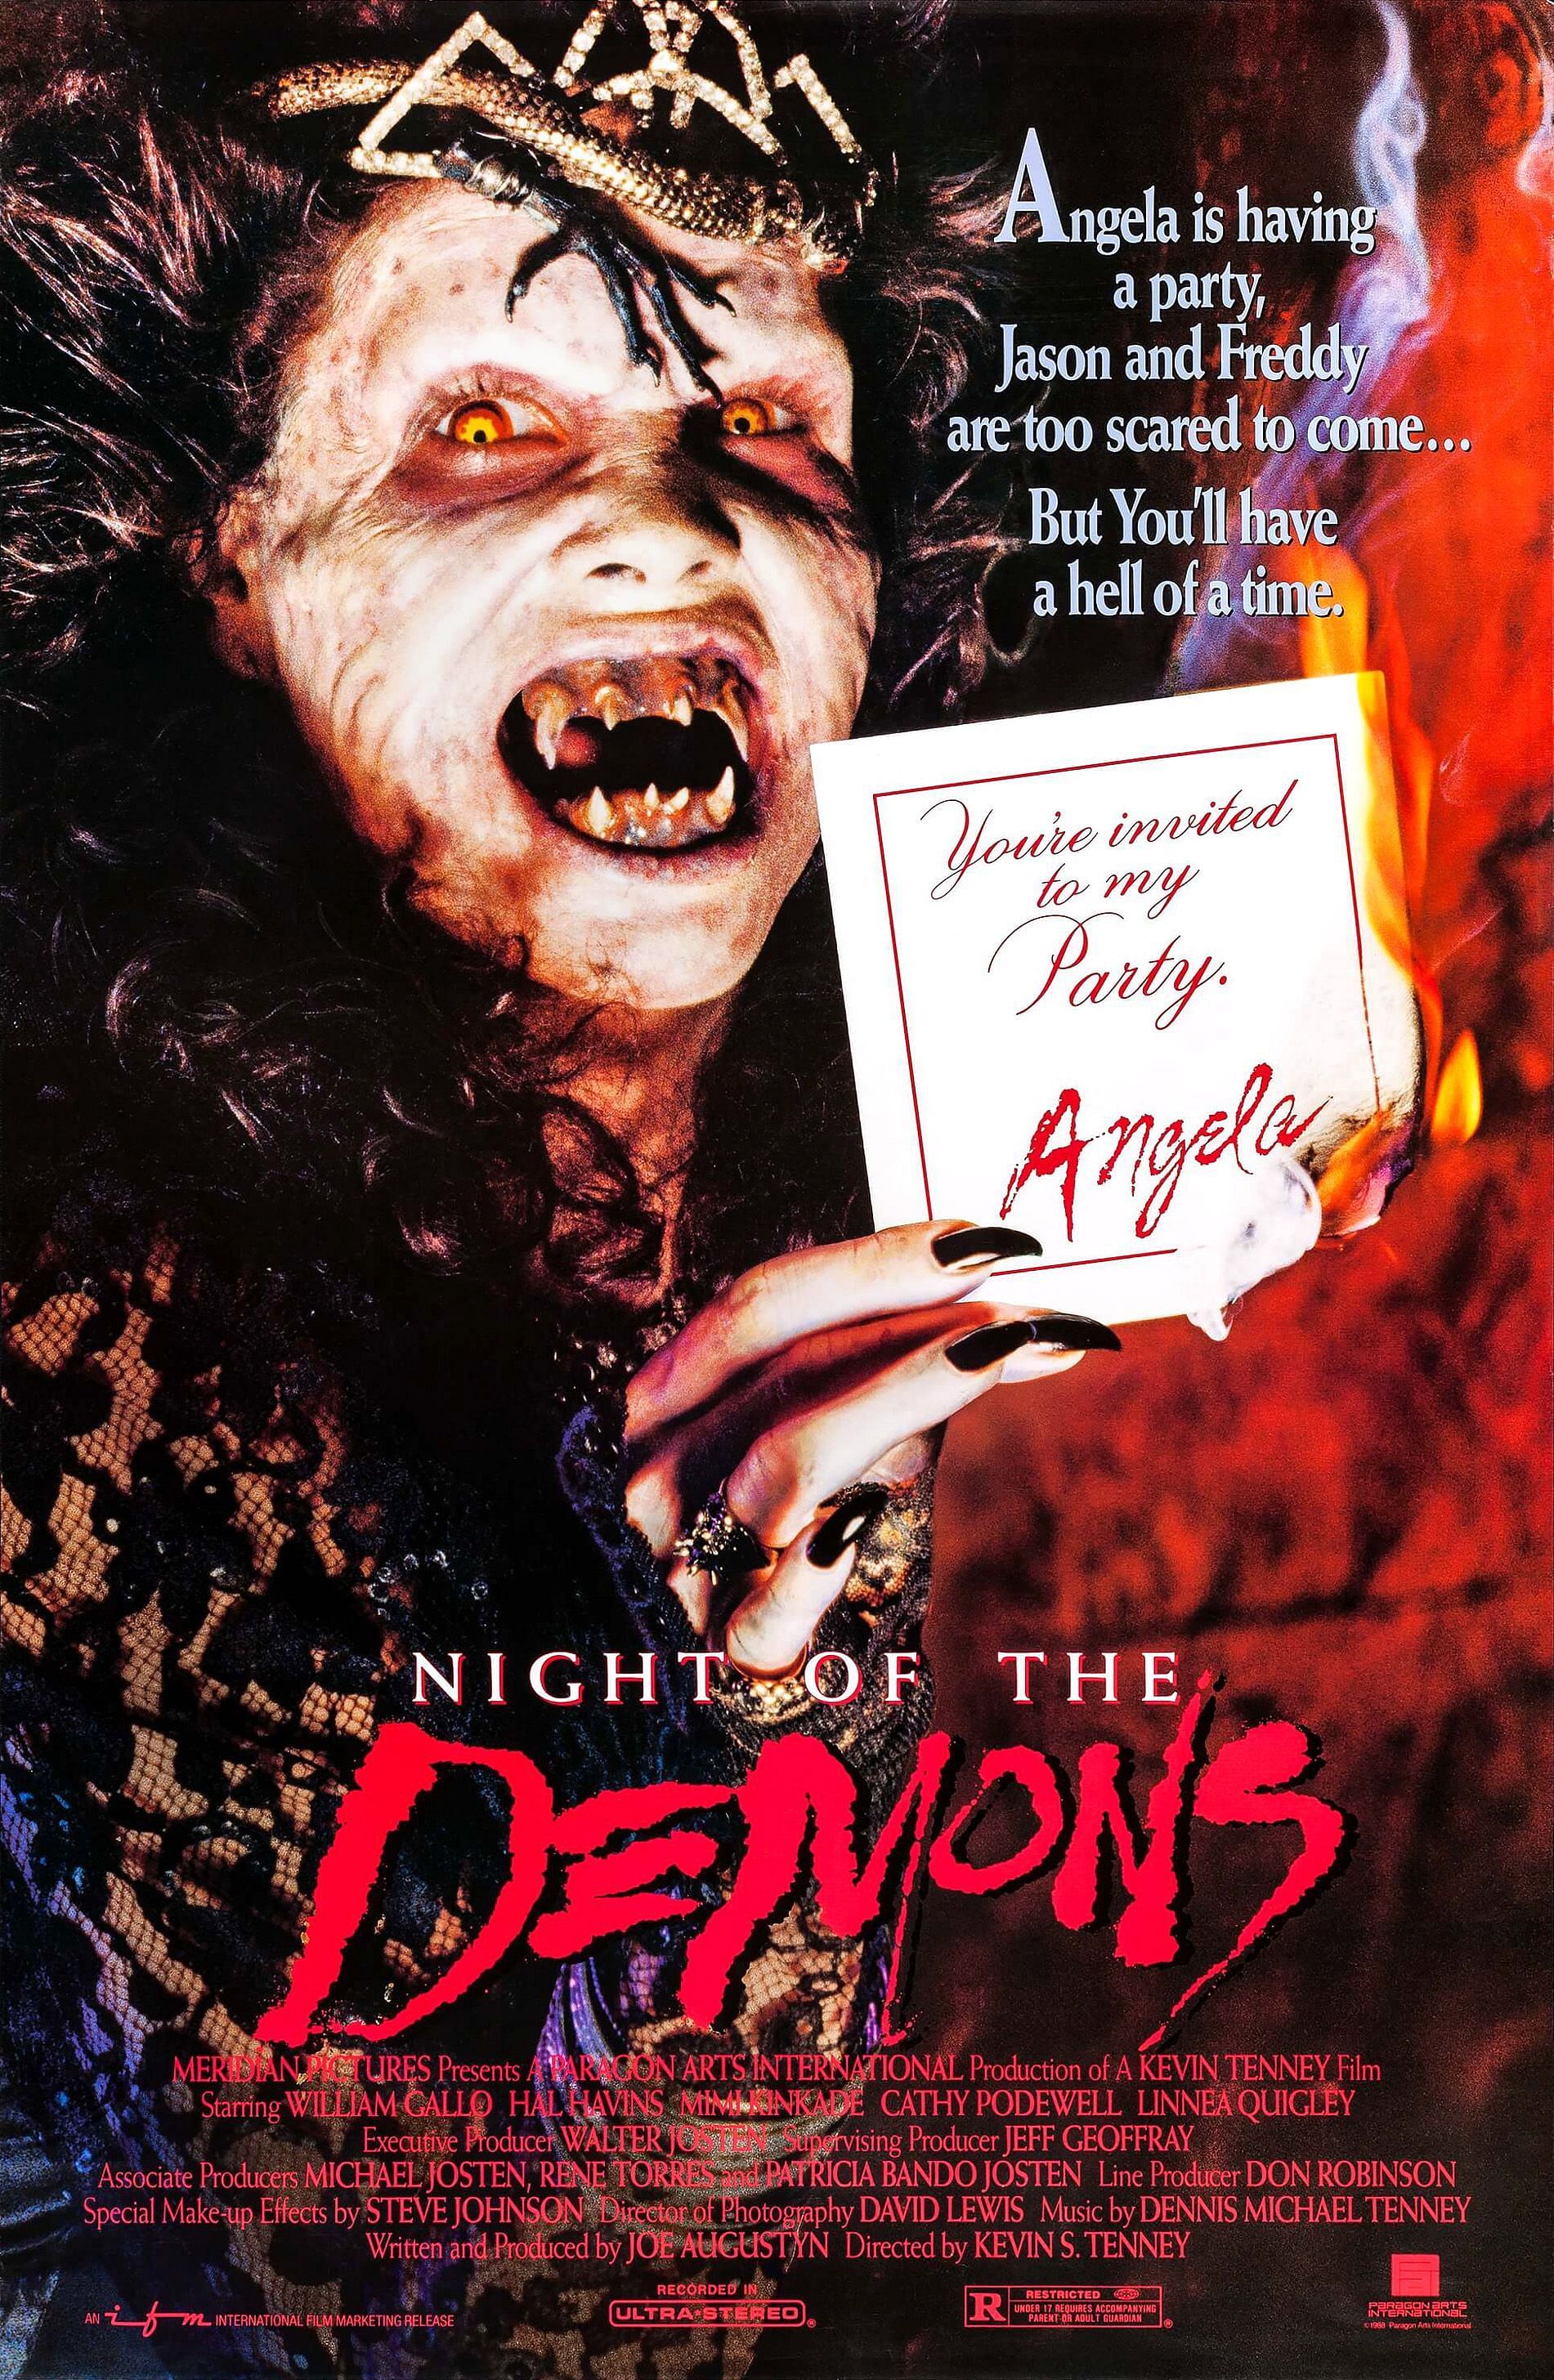 Night of the Demons (Image via International Film Marketing)